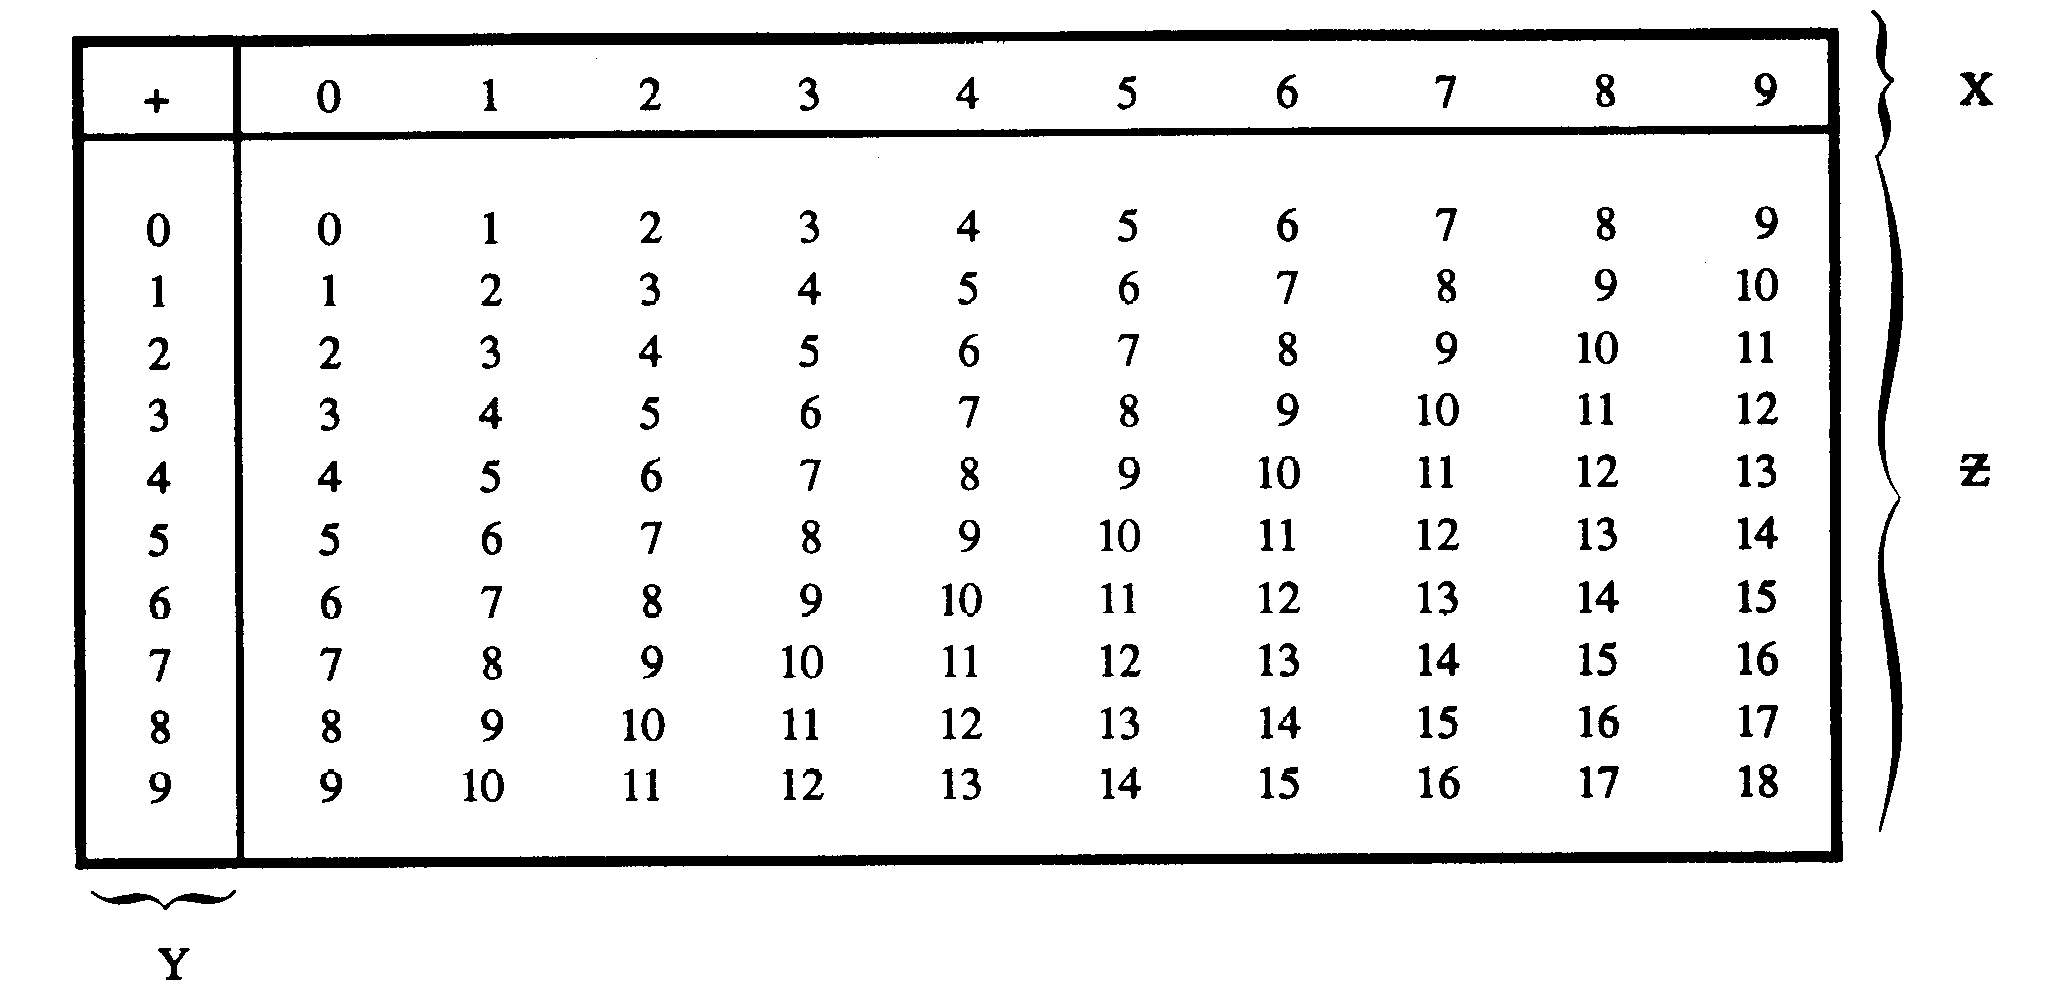 Base 7 Number Chart